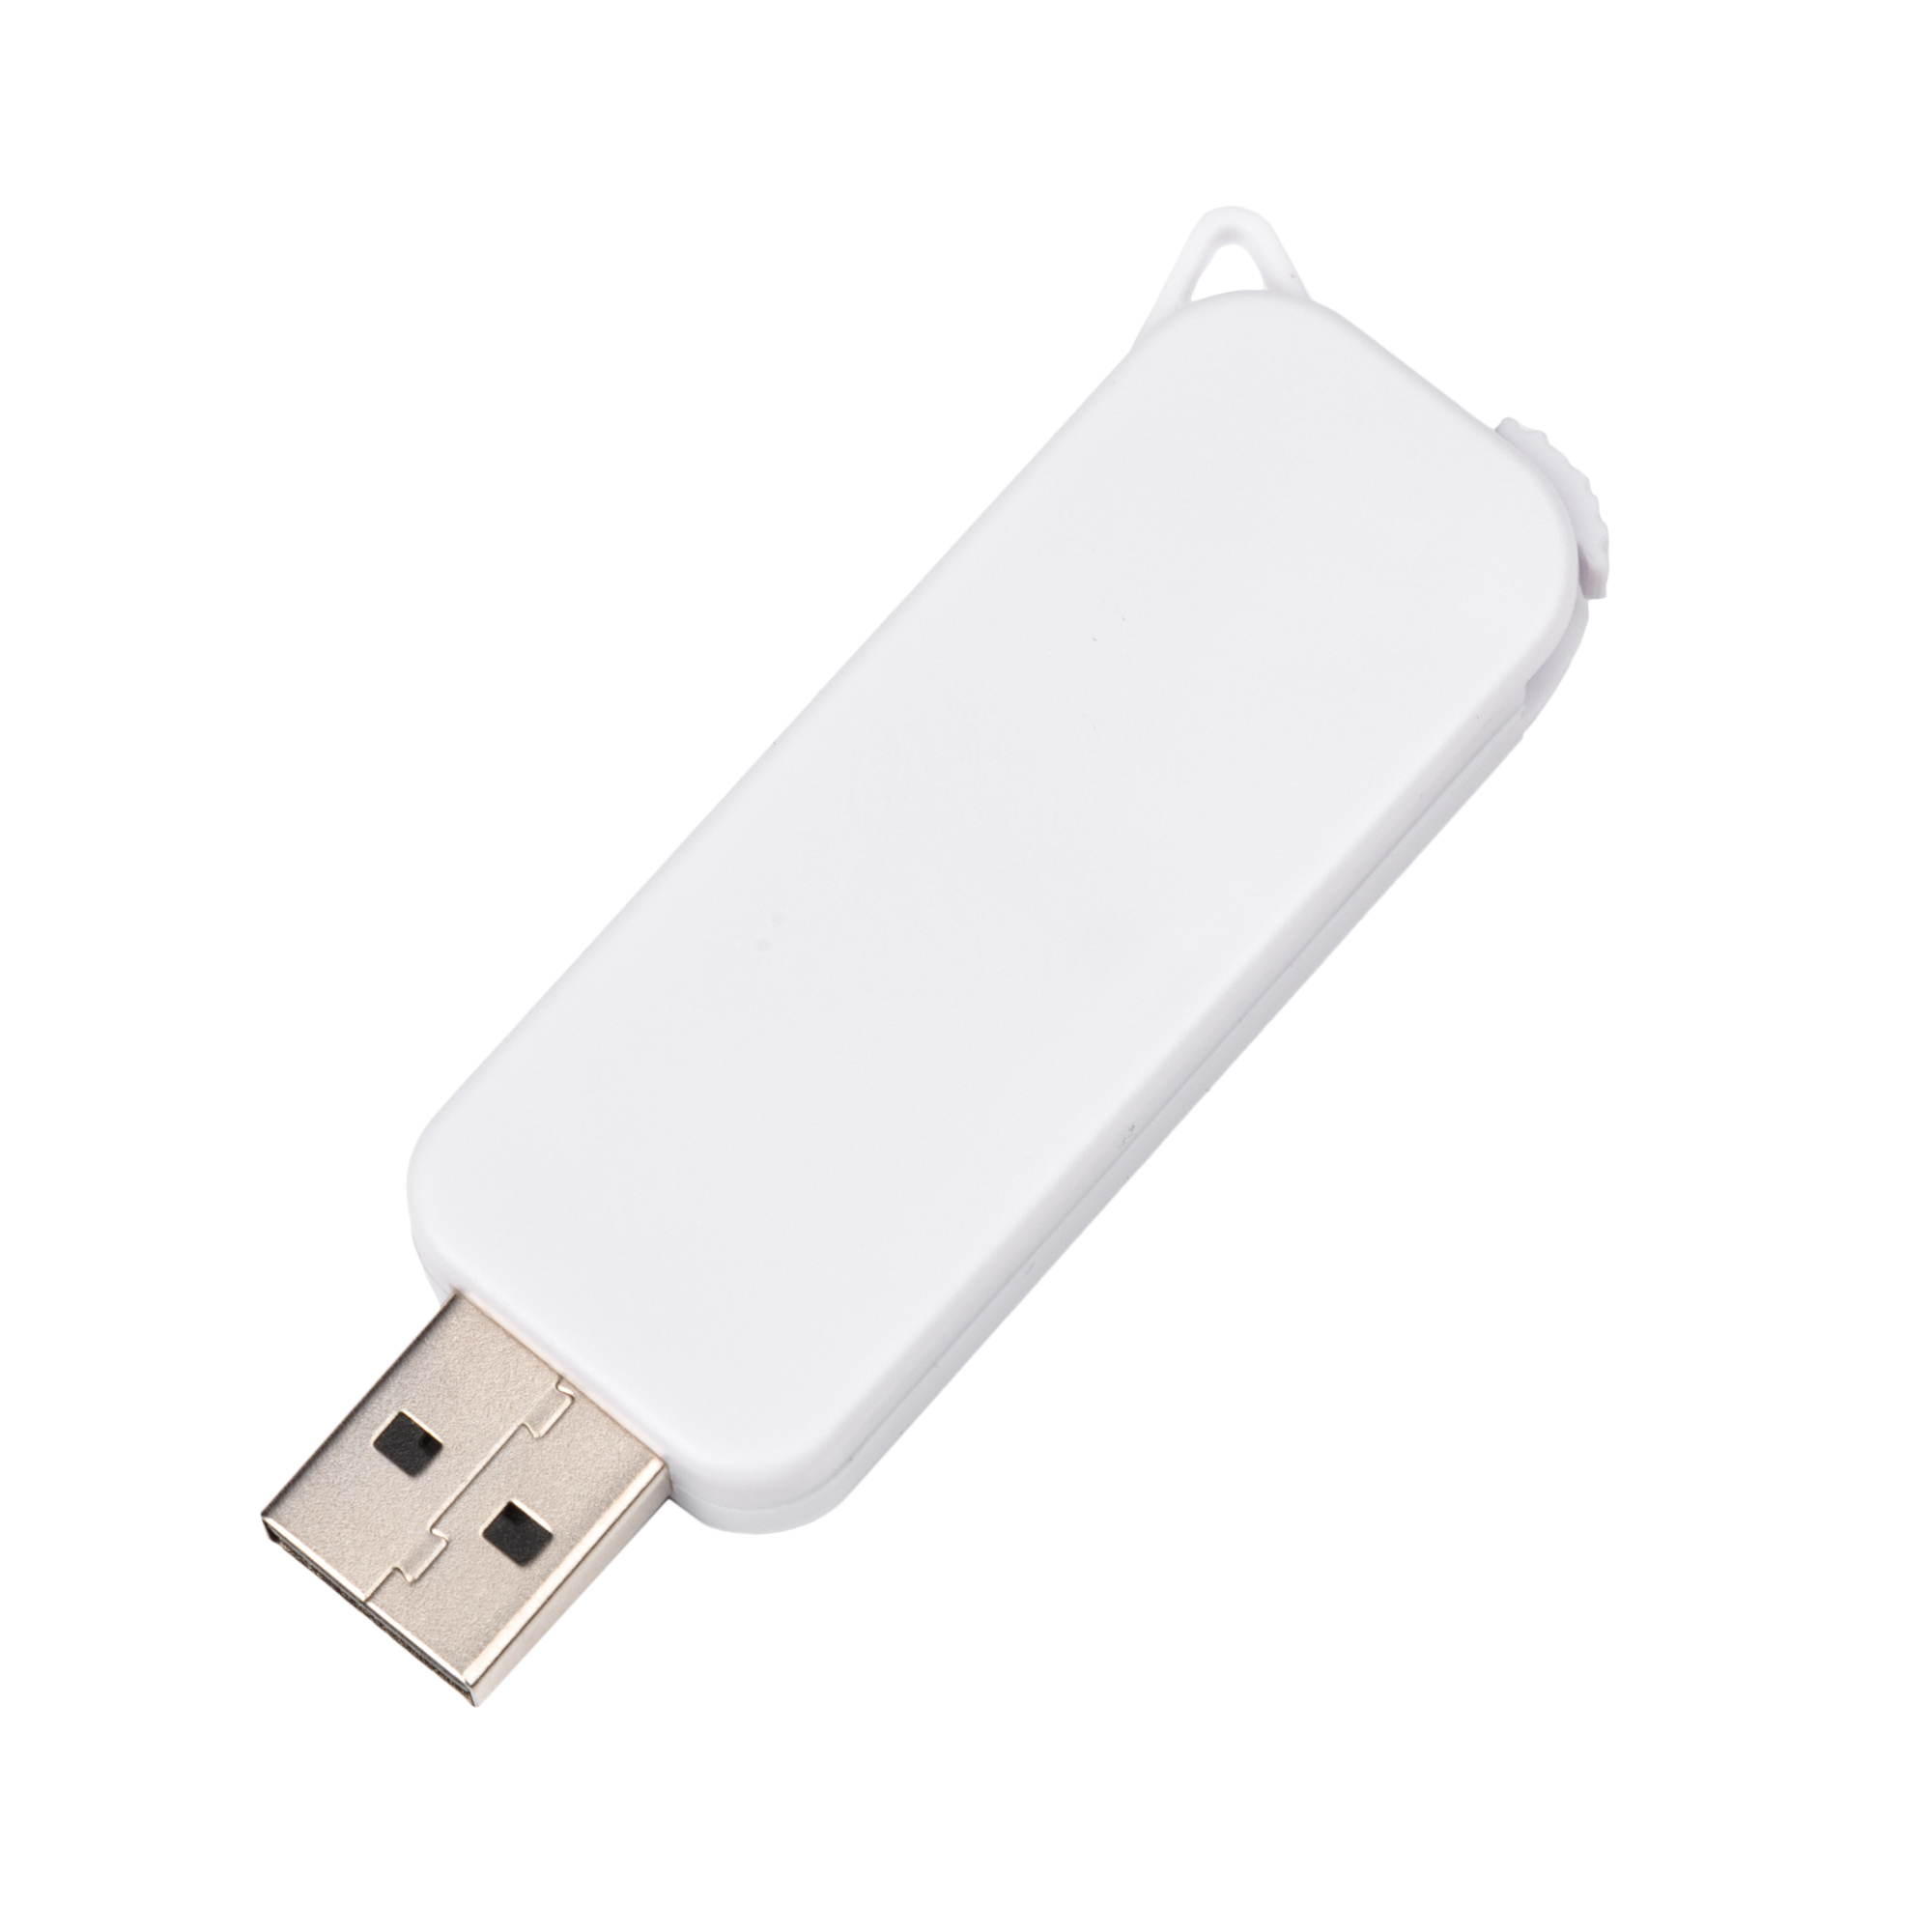 USB-флешка модель 123, (USB 2.0), объем памяти 128 GB, цвет белый